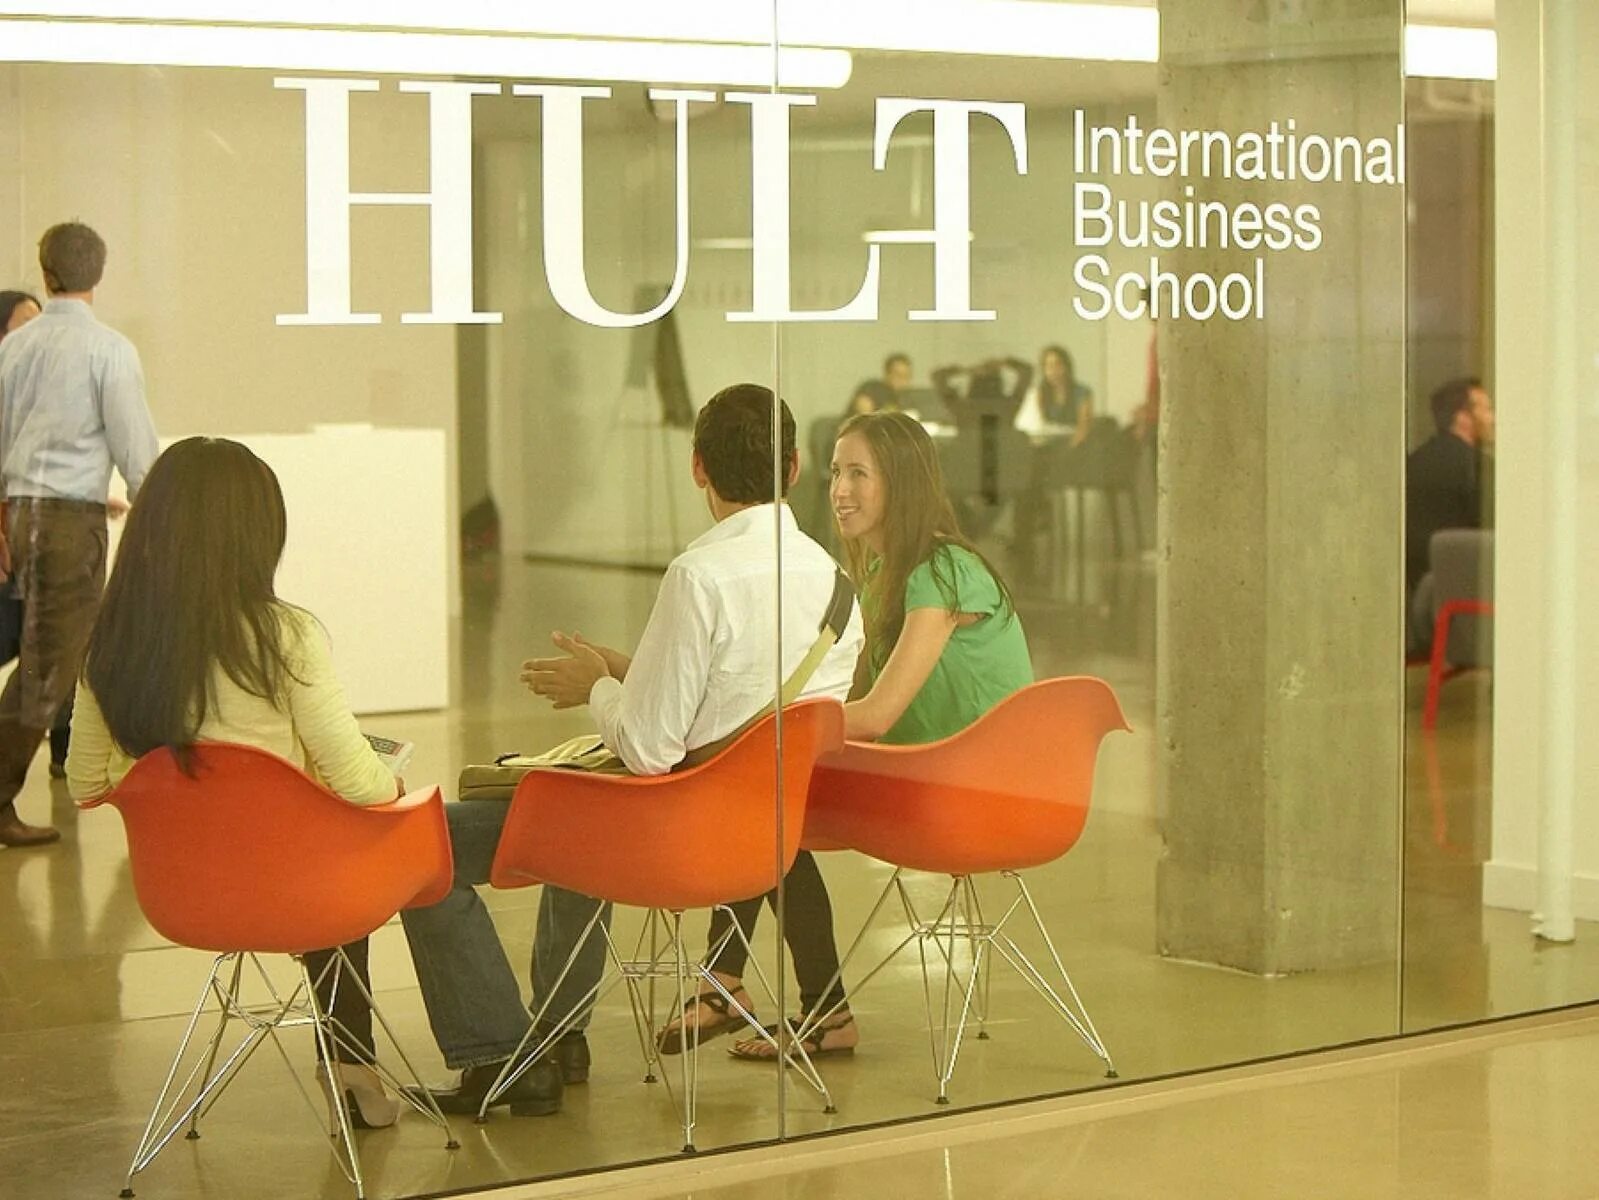 Международная школа бизнеса. Hult Business School. Hult International Business School London. Hult International Business School in Dubai. Международная бизнес-школа халта (Hult).